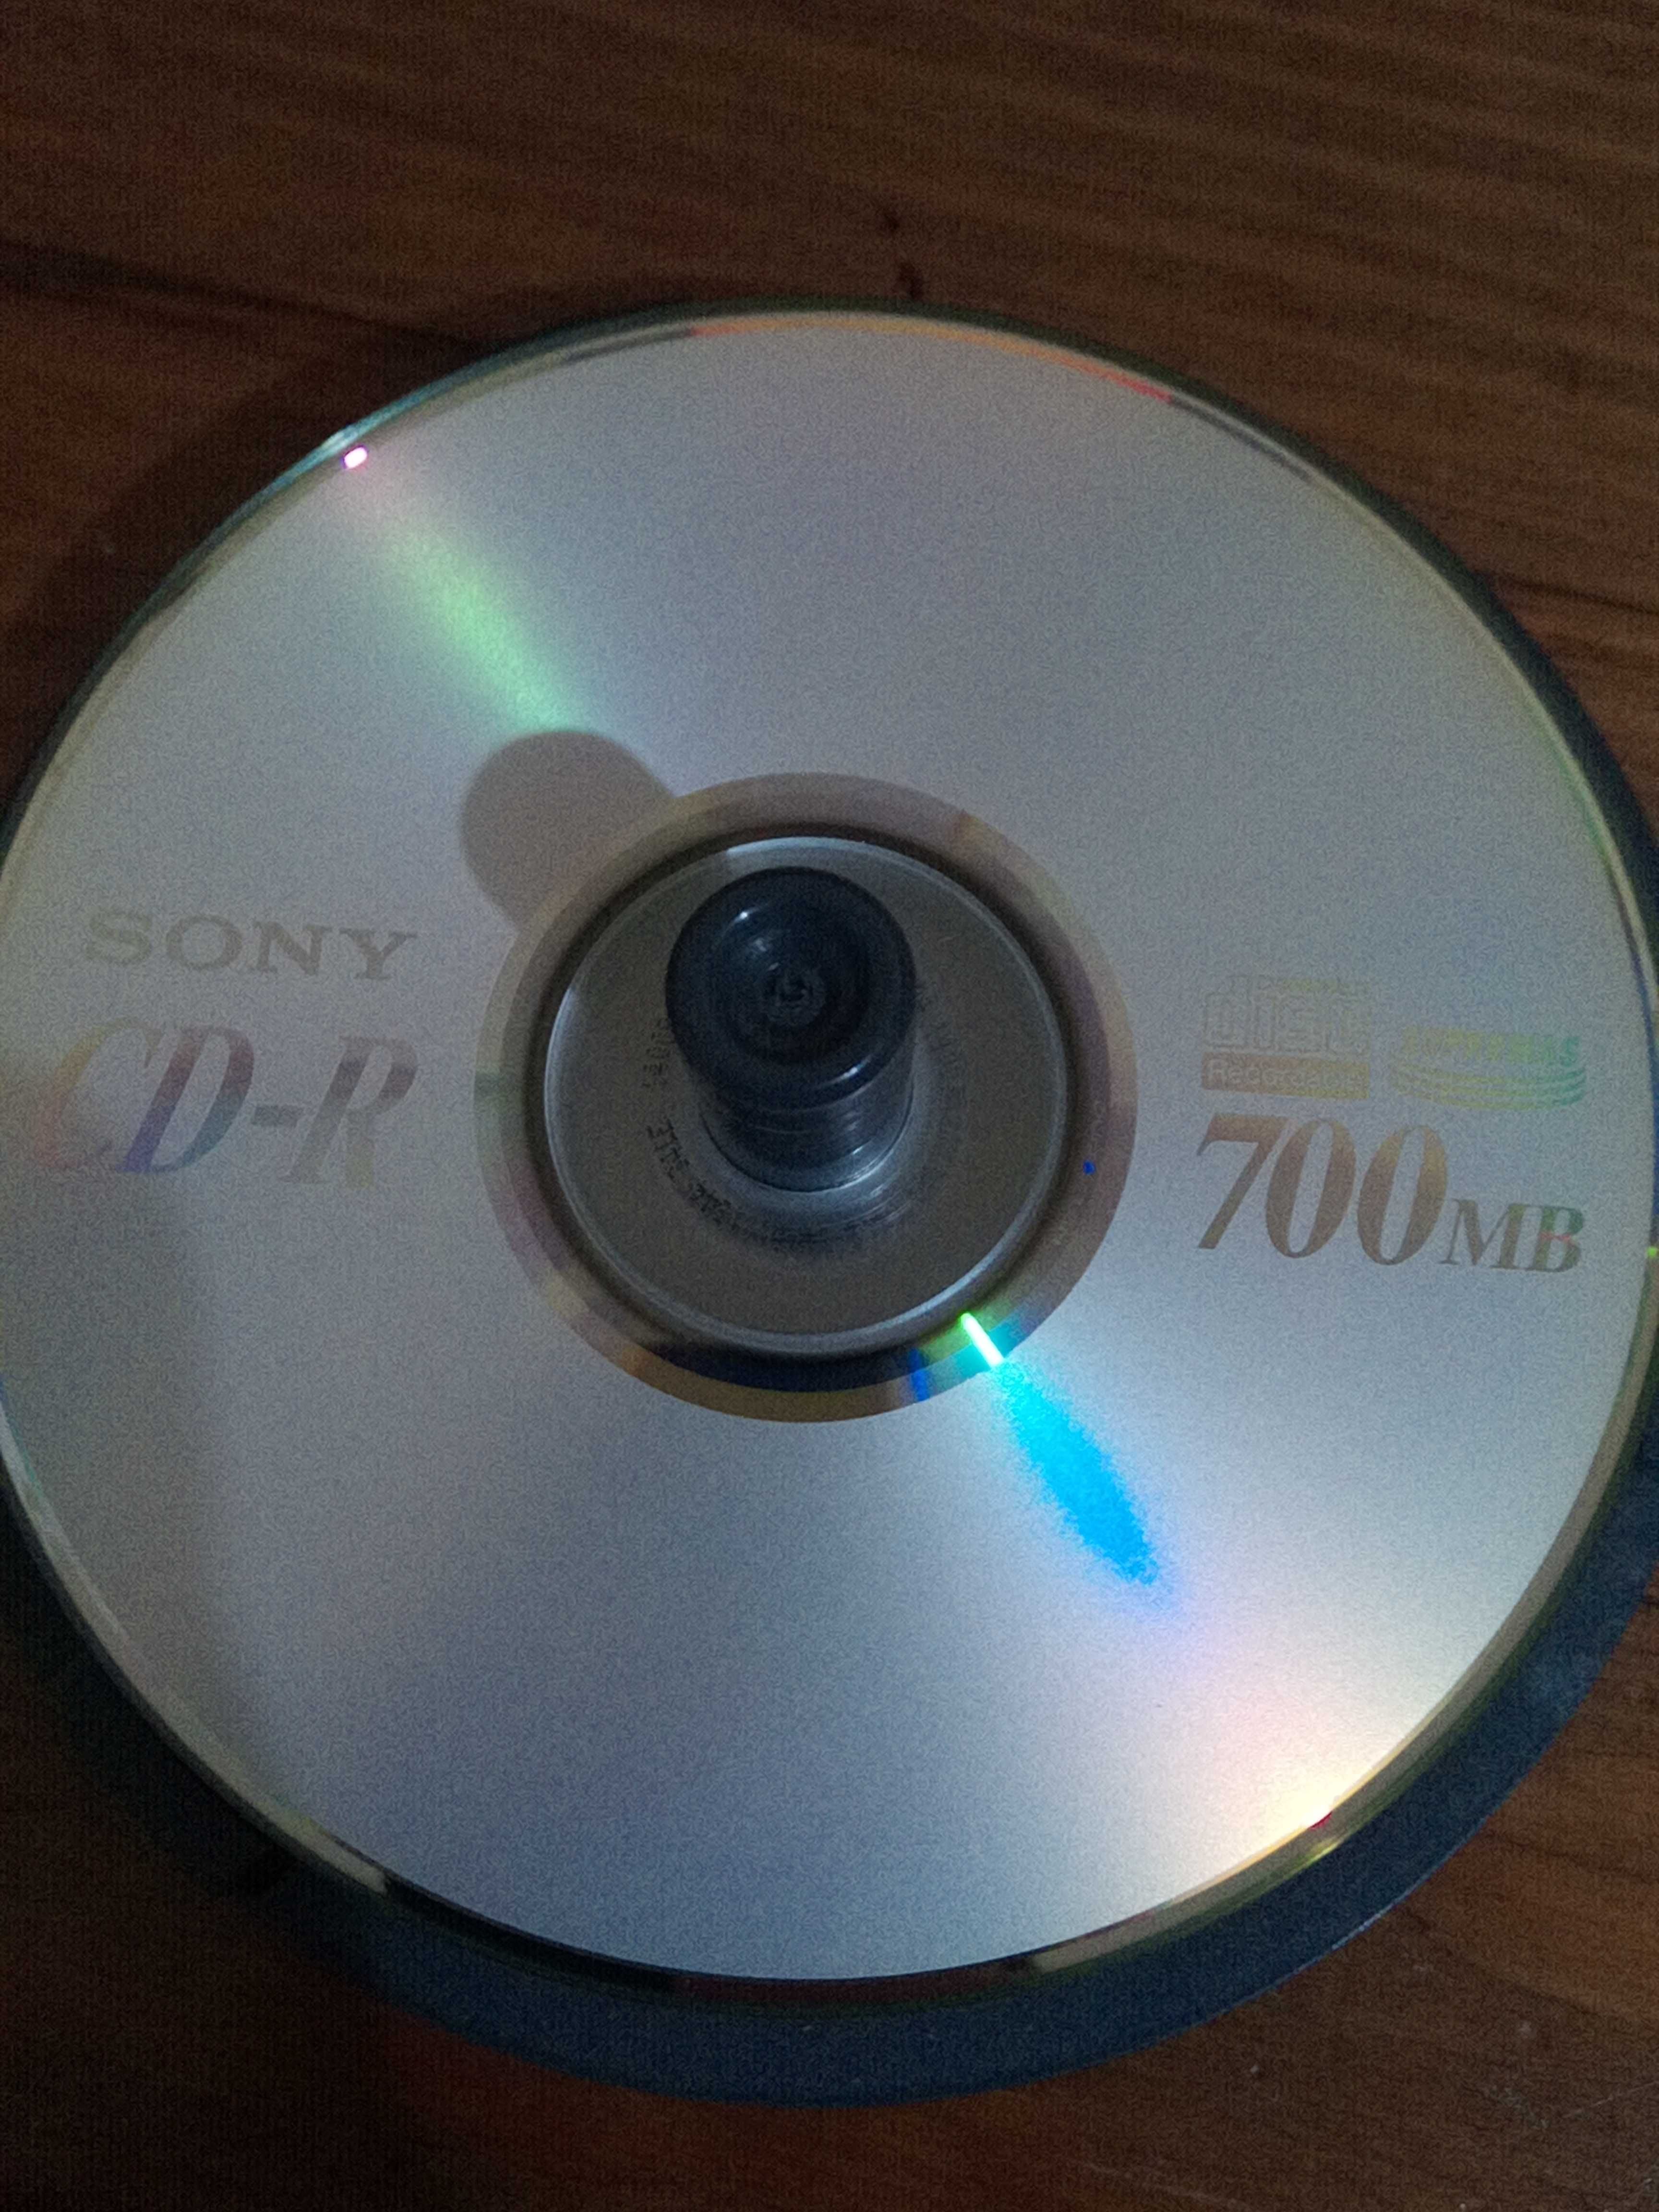 9 Discos CD vazios 700mb da Sony (novos)